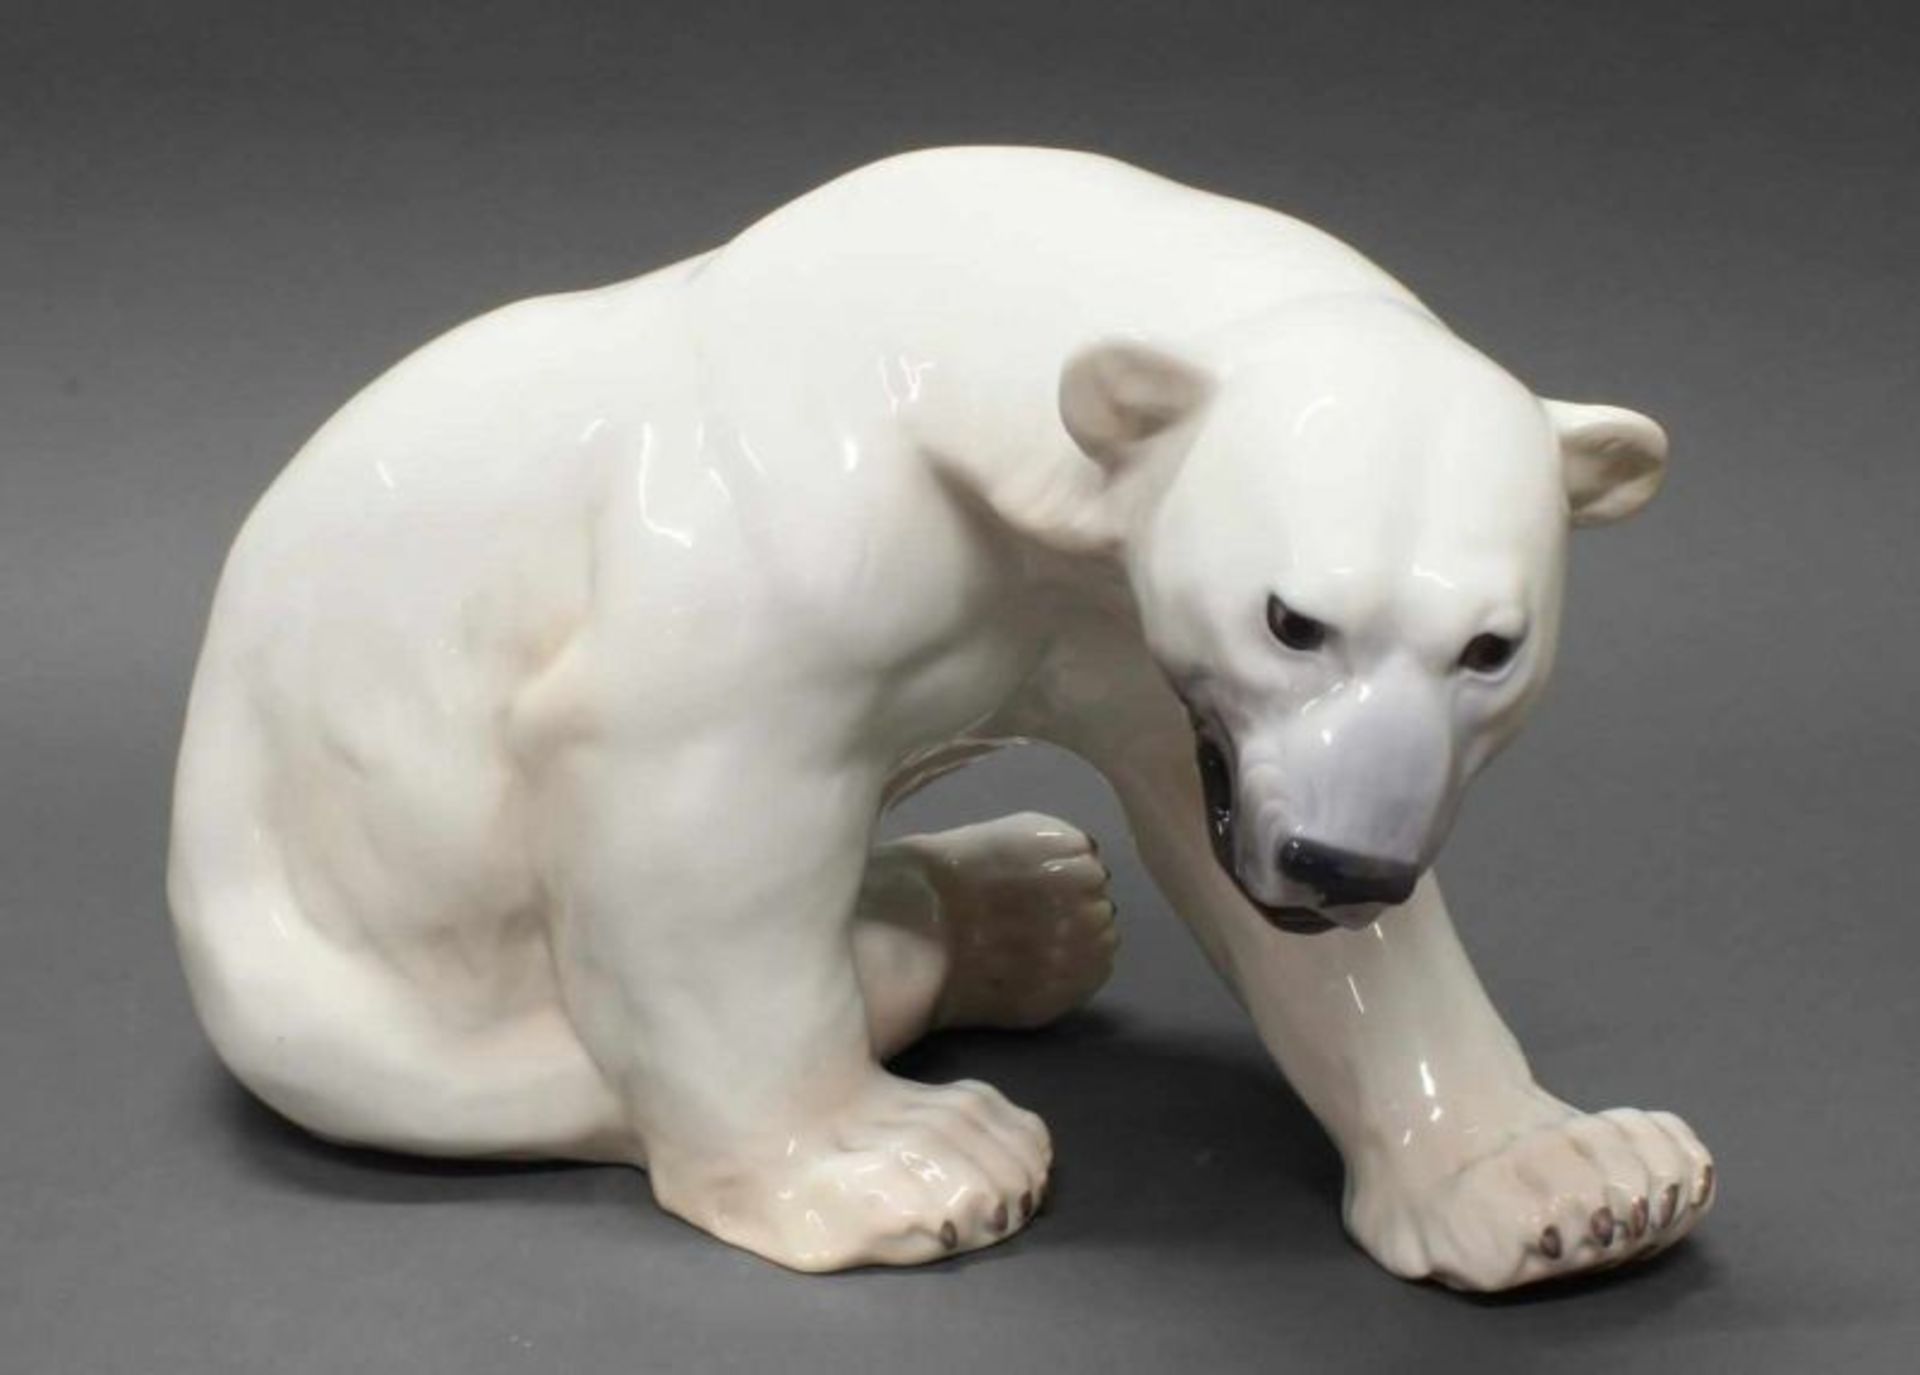 Porzellanfigur, "Eisbär", Bing & Gröndahl, Modellnummer 1857, polychrom, Modellentwurf von Knud Kyhn